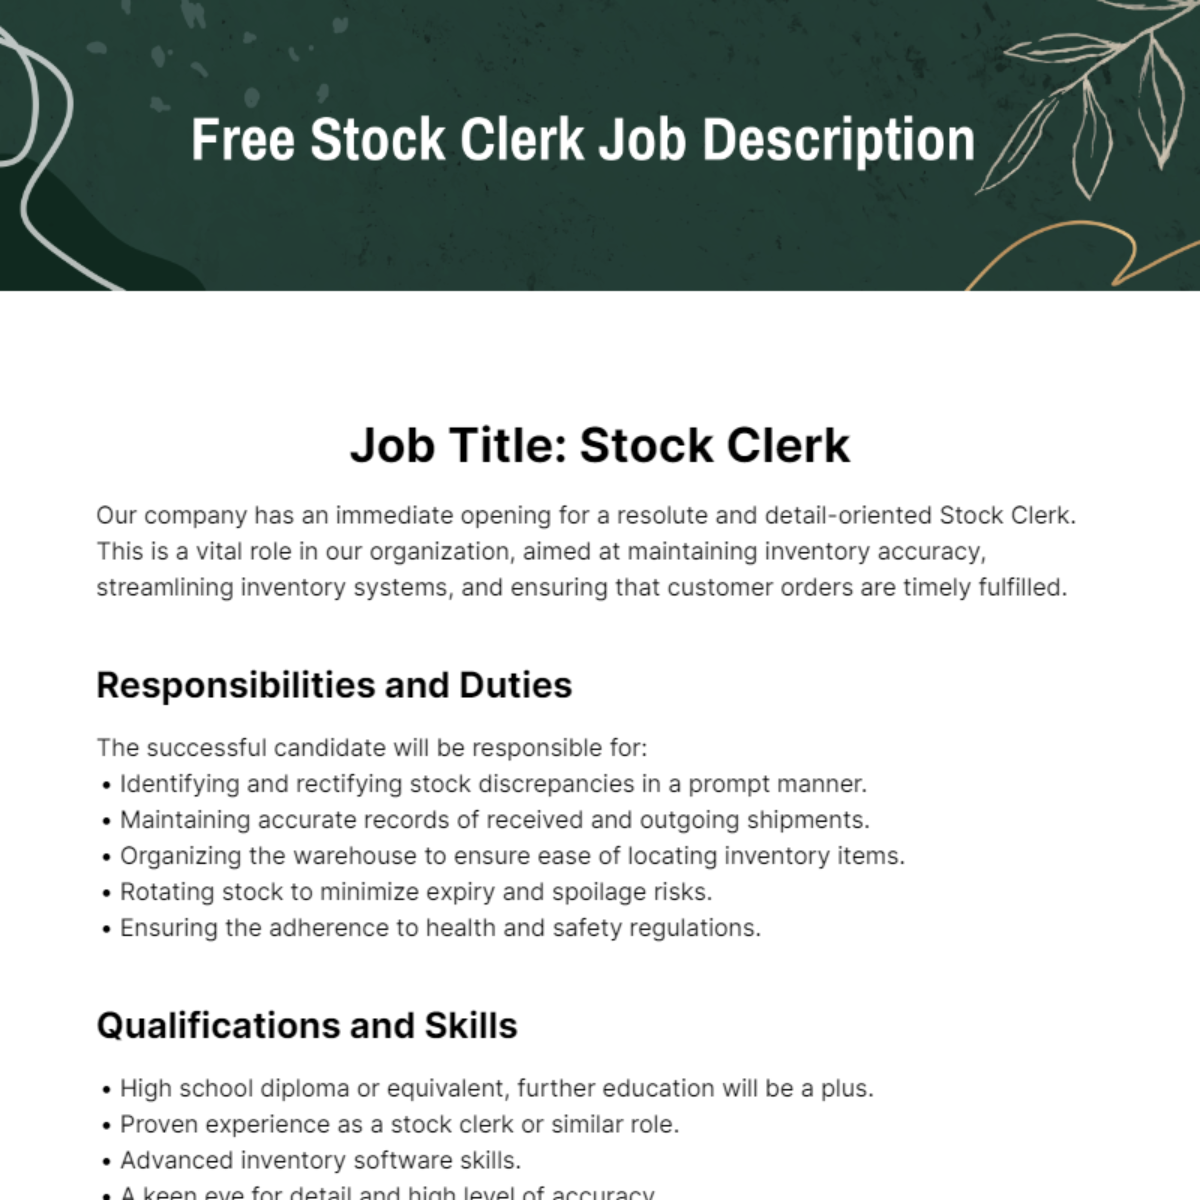 Free Stock Clerk Job Description Template